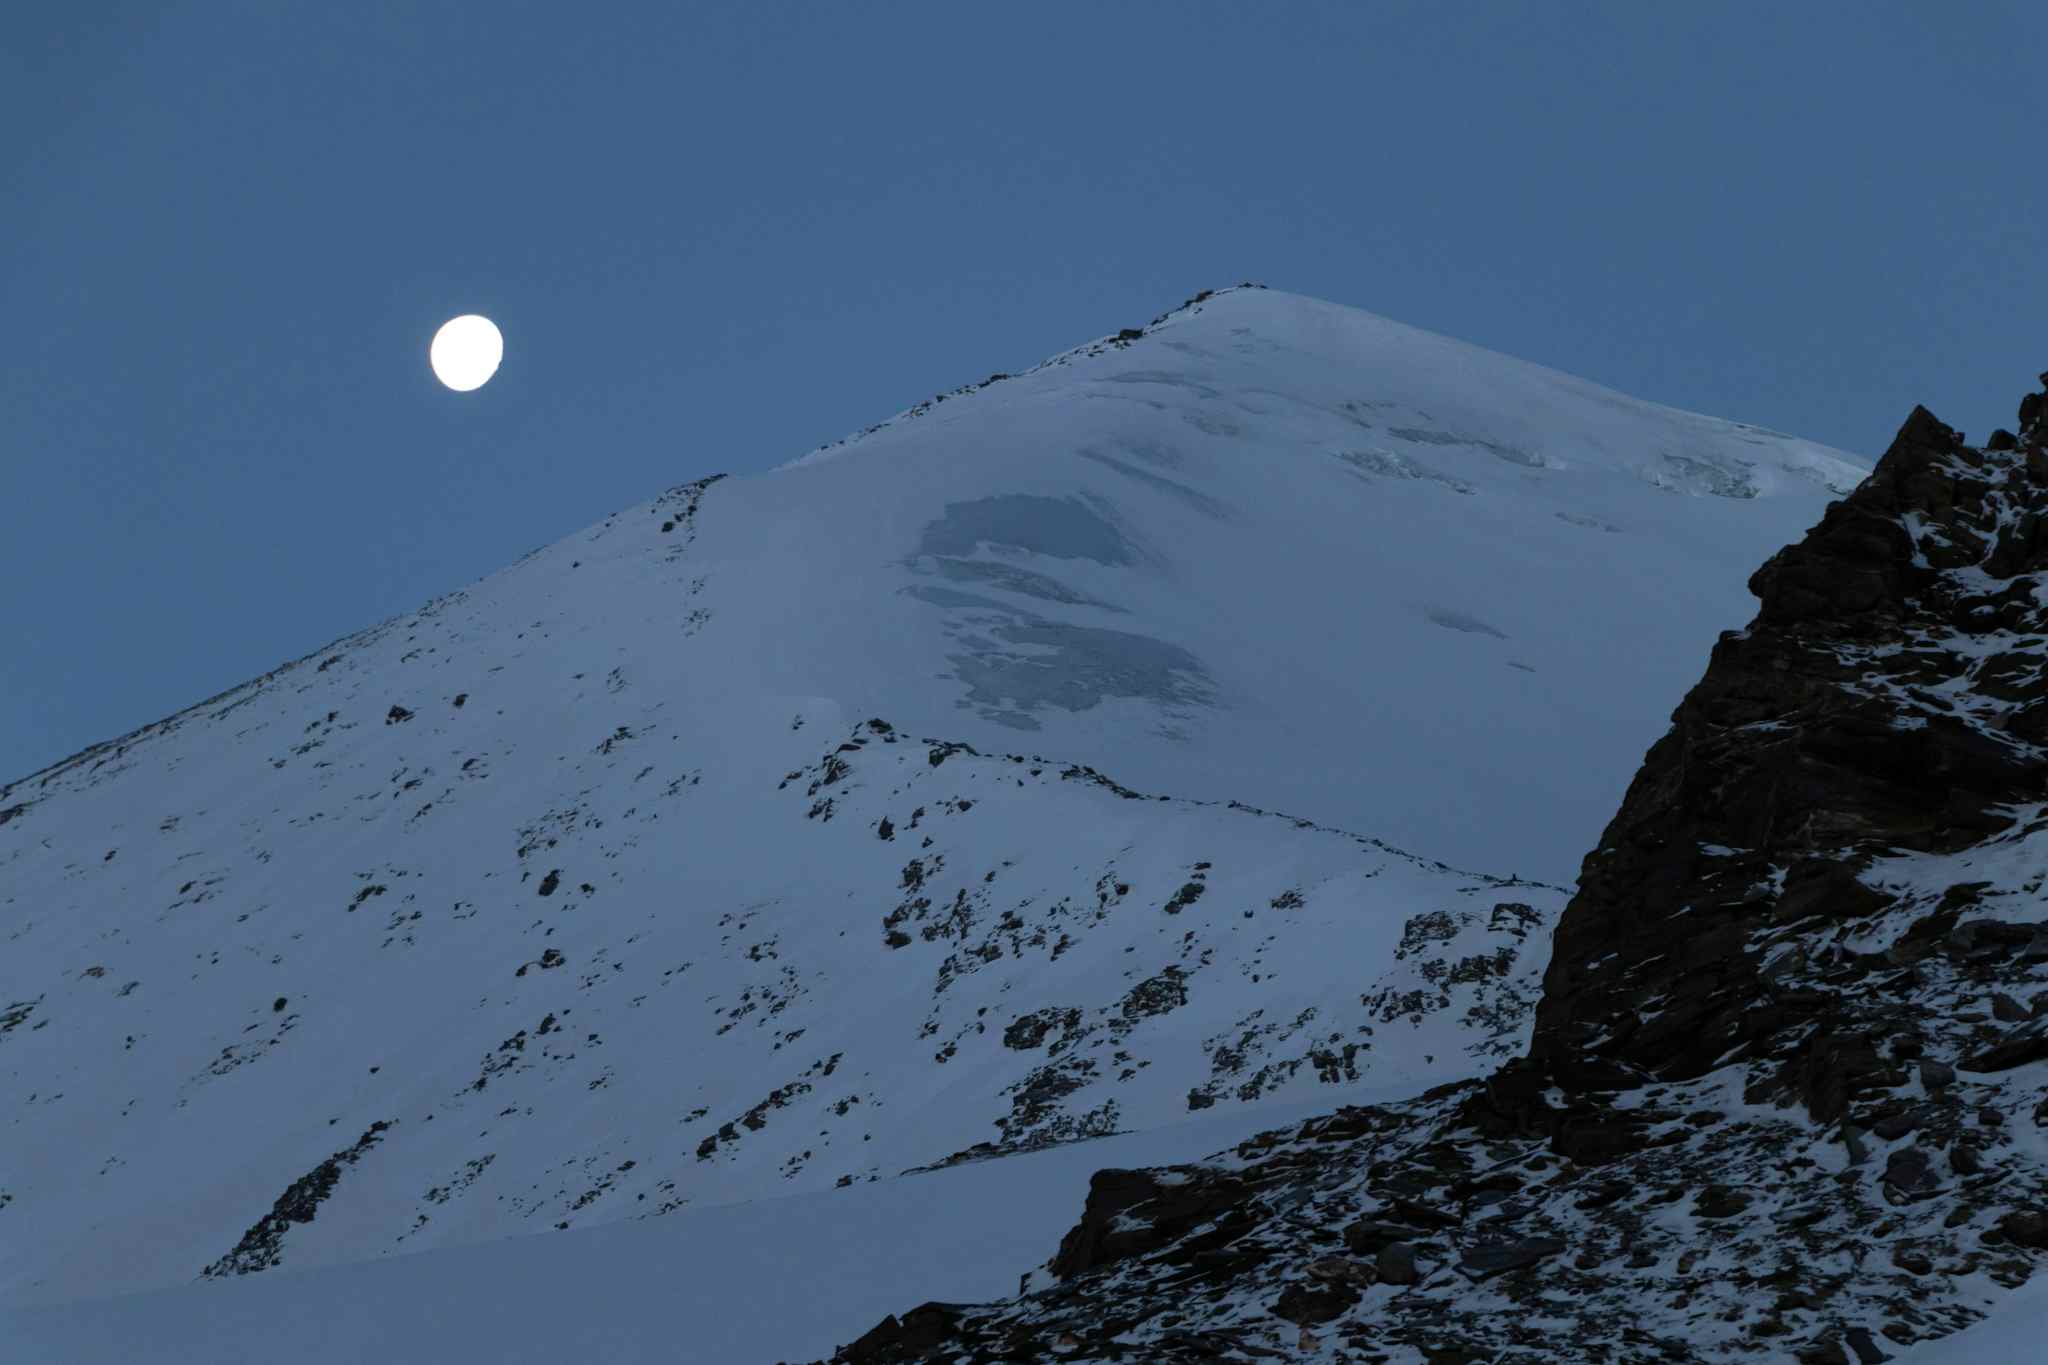 The moon over UT Kangri Peak at night in Ladakh, India